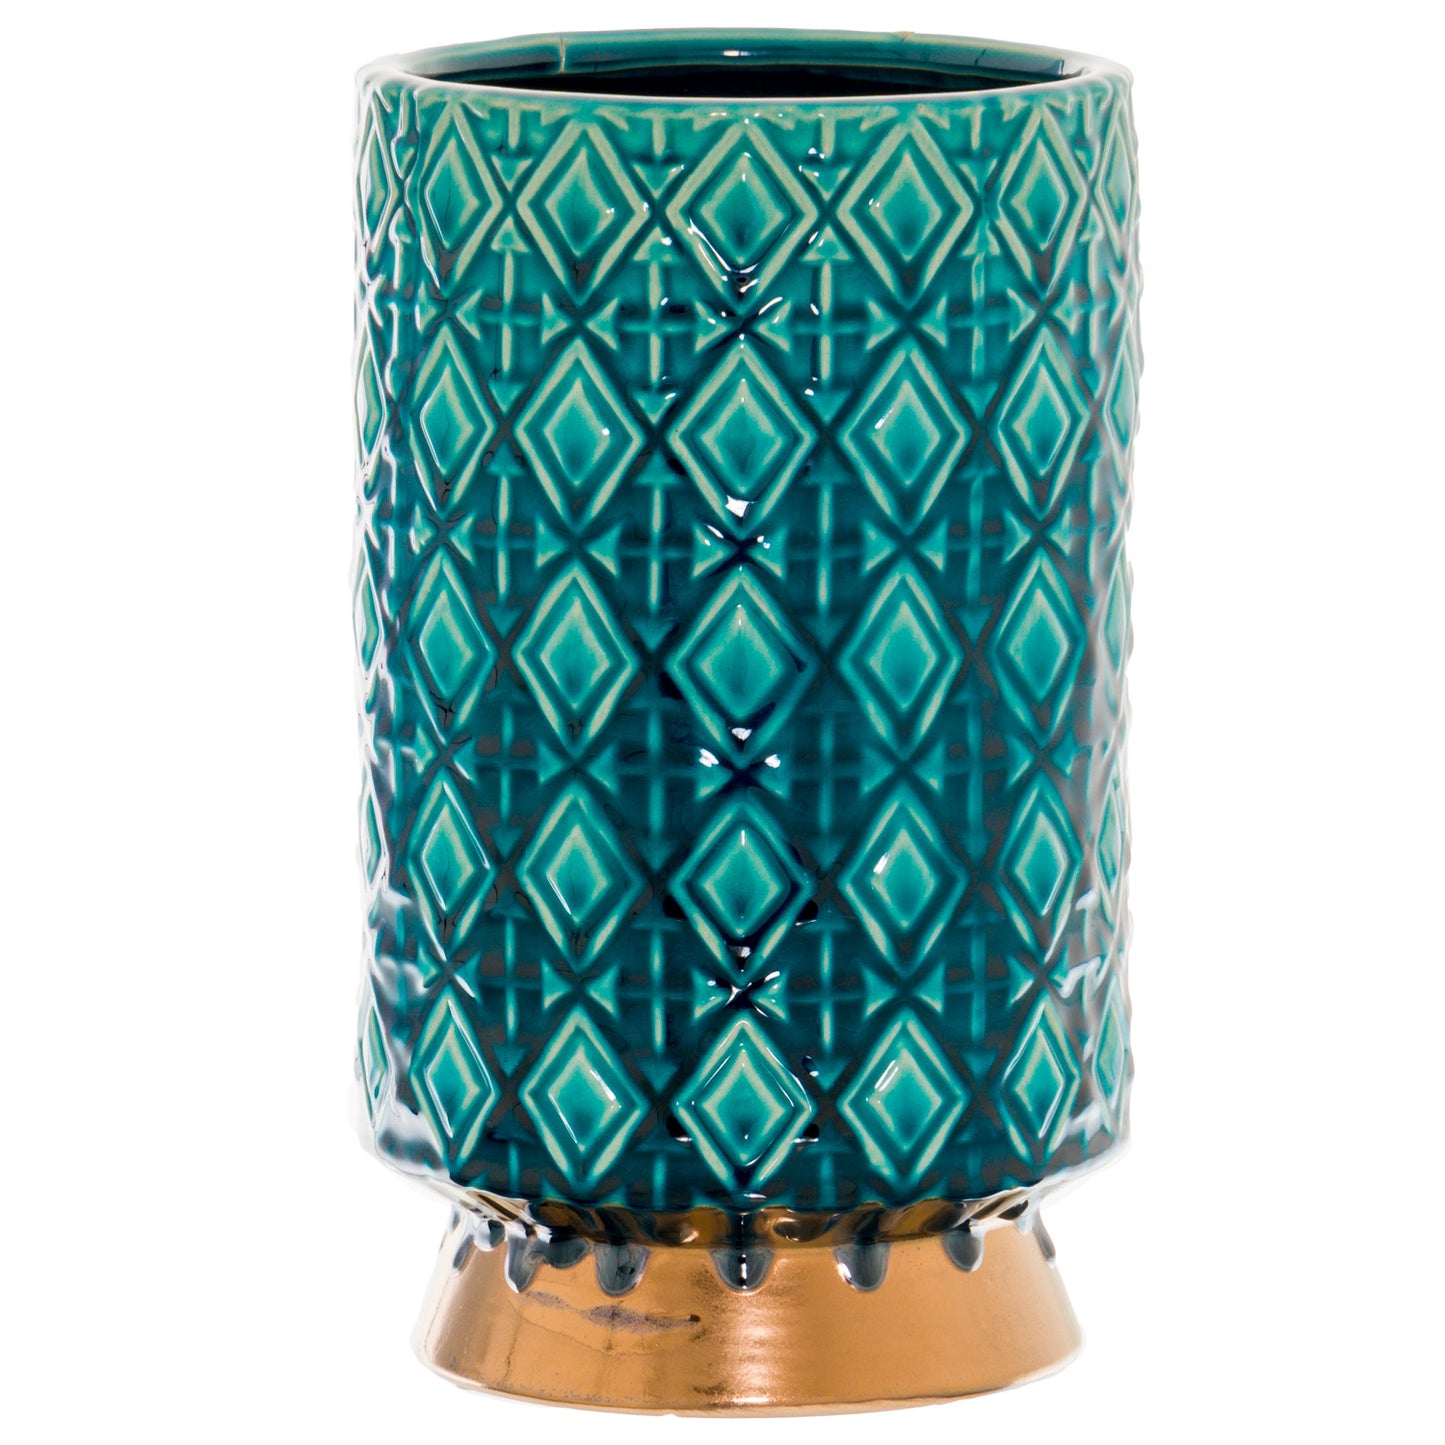 Seville Collection Paragon Large Vase